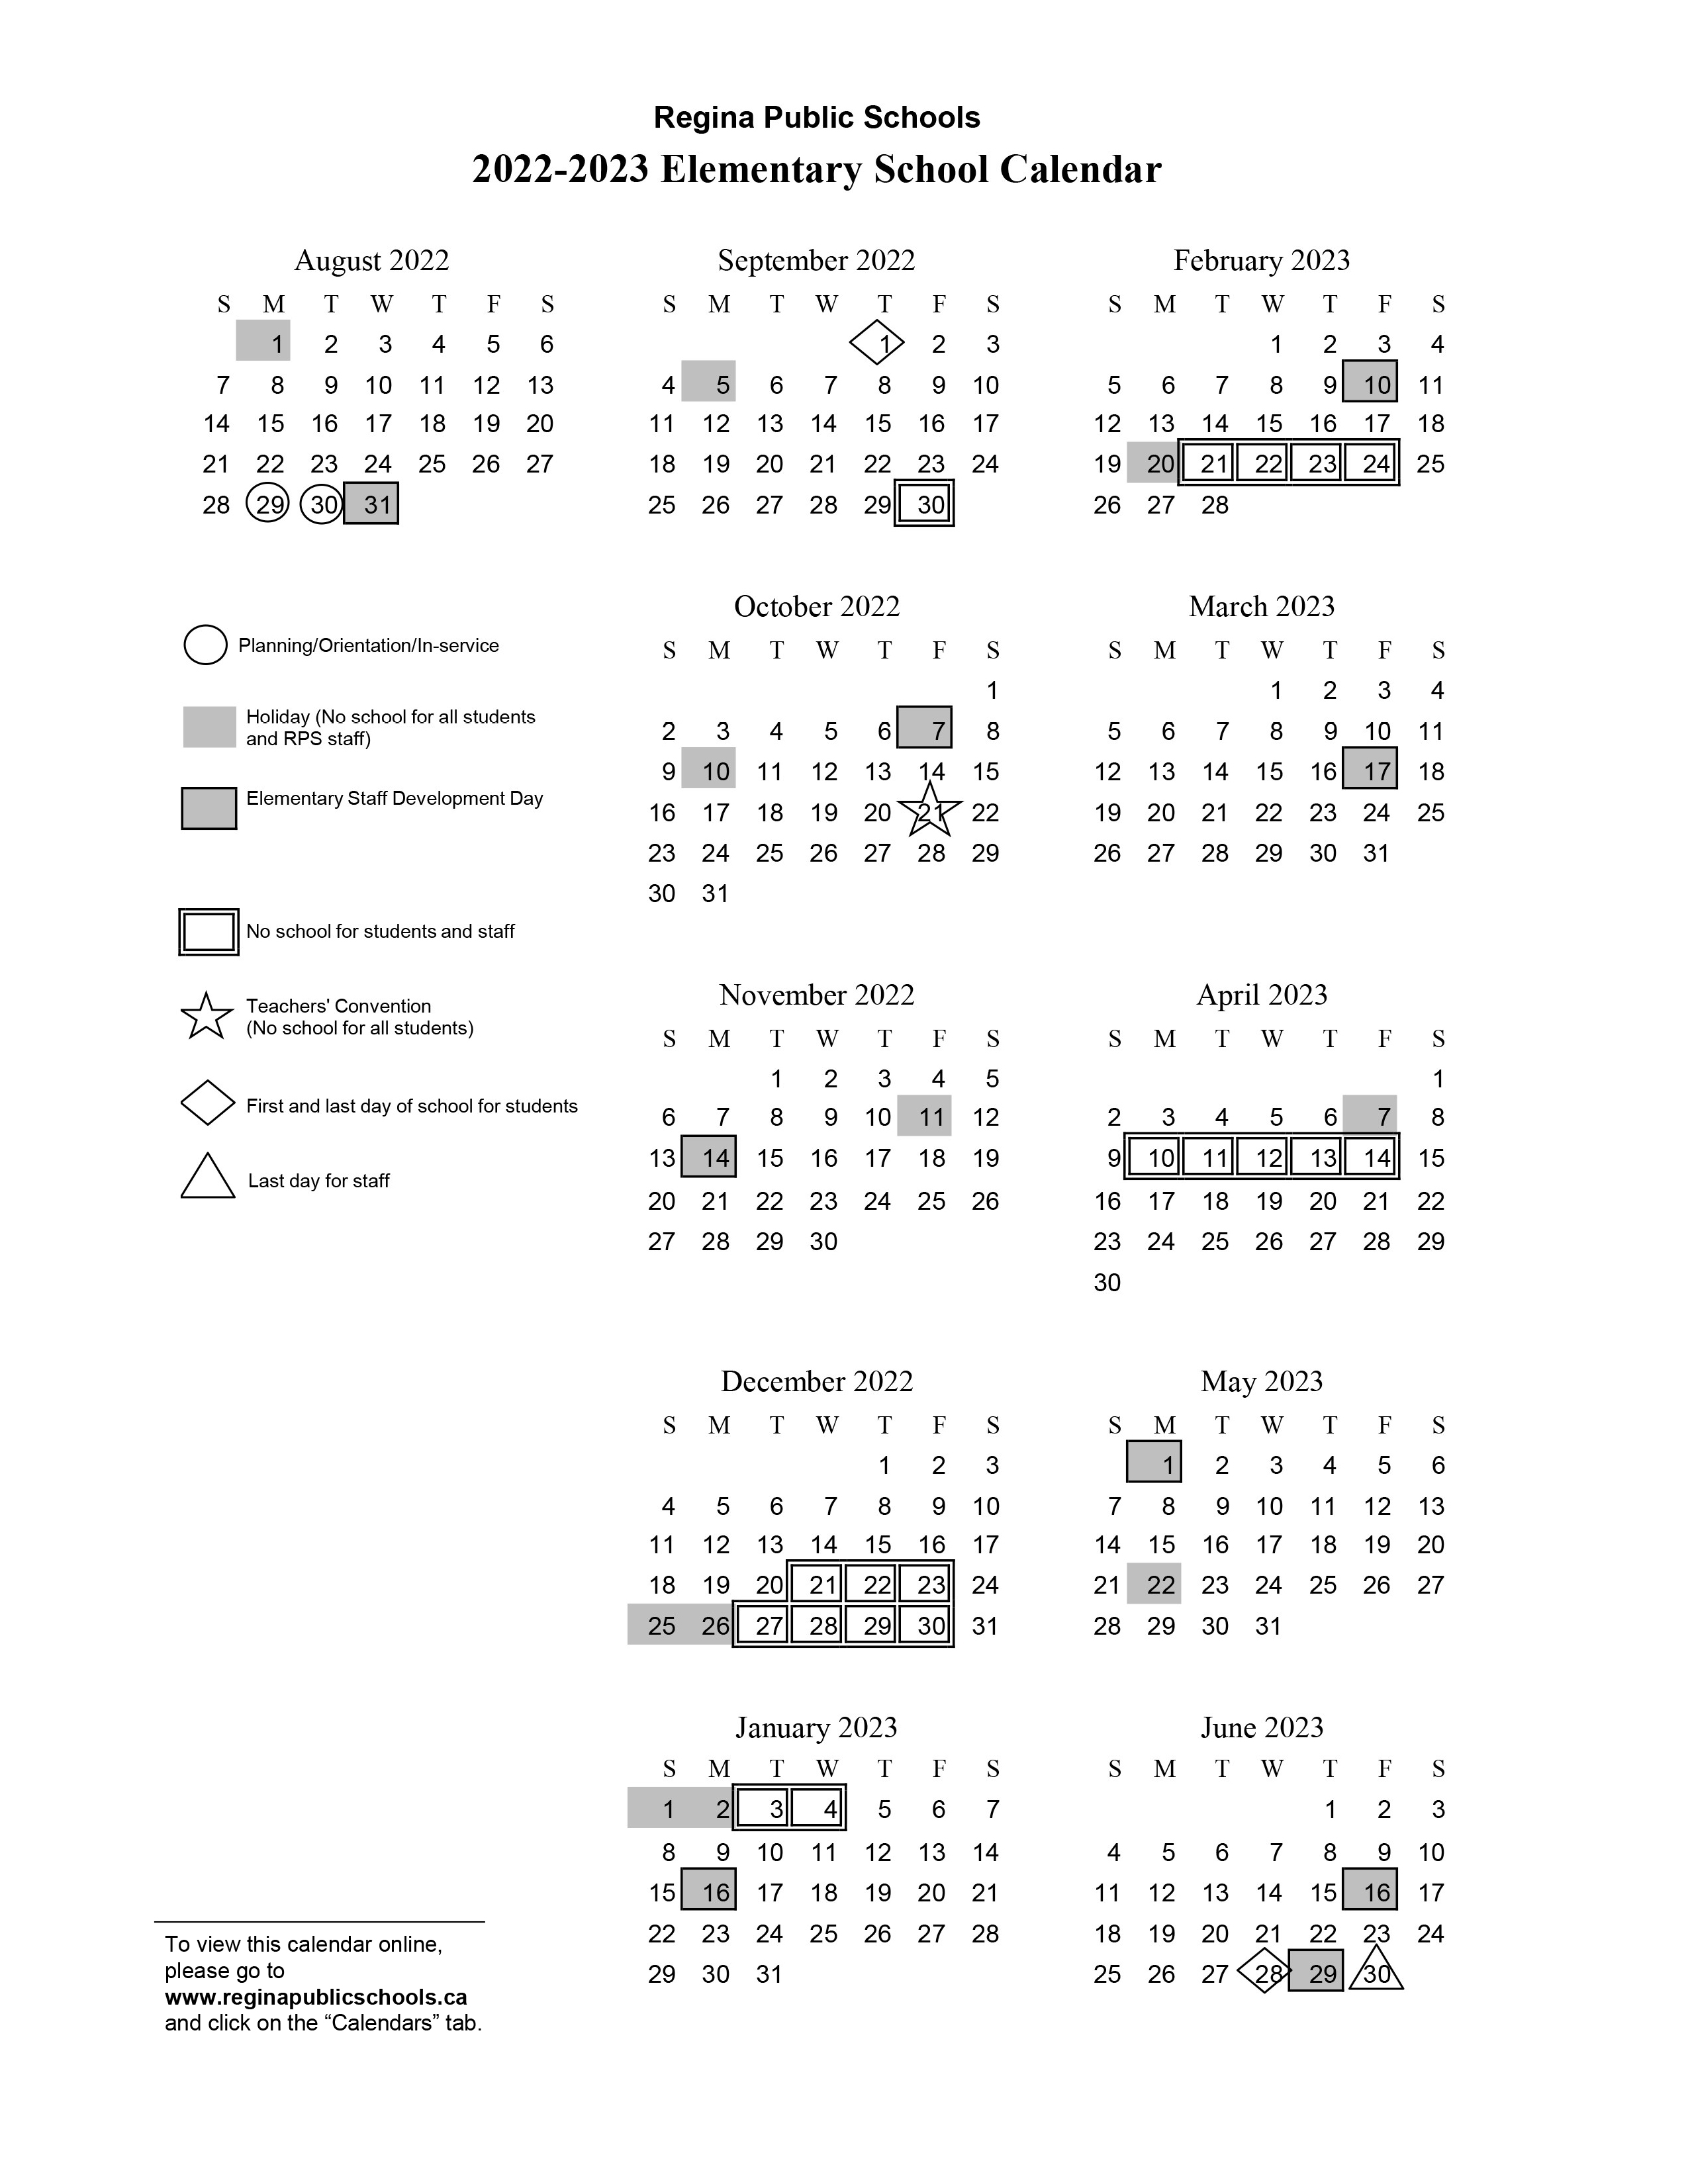 elementary-calendar-2022-23-regina-public-schools